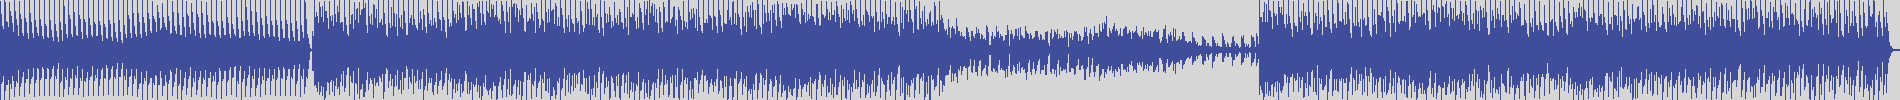 nf_boyz_records [NFY078] Larry Morrell - D Tect [Original Mix] audio wave form